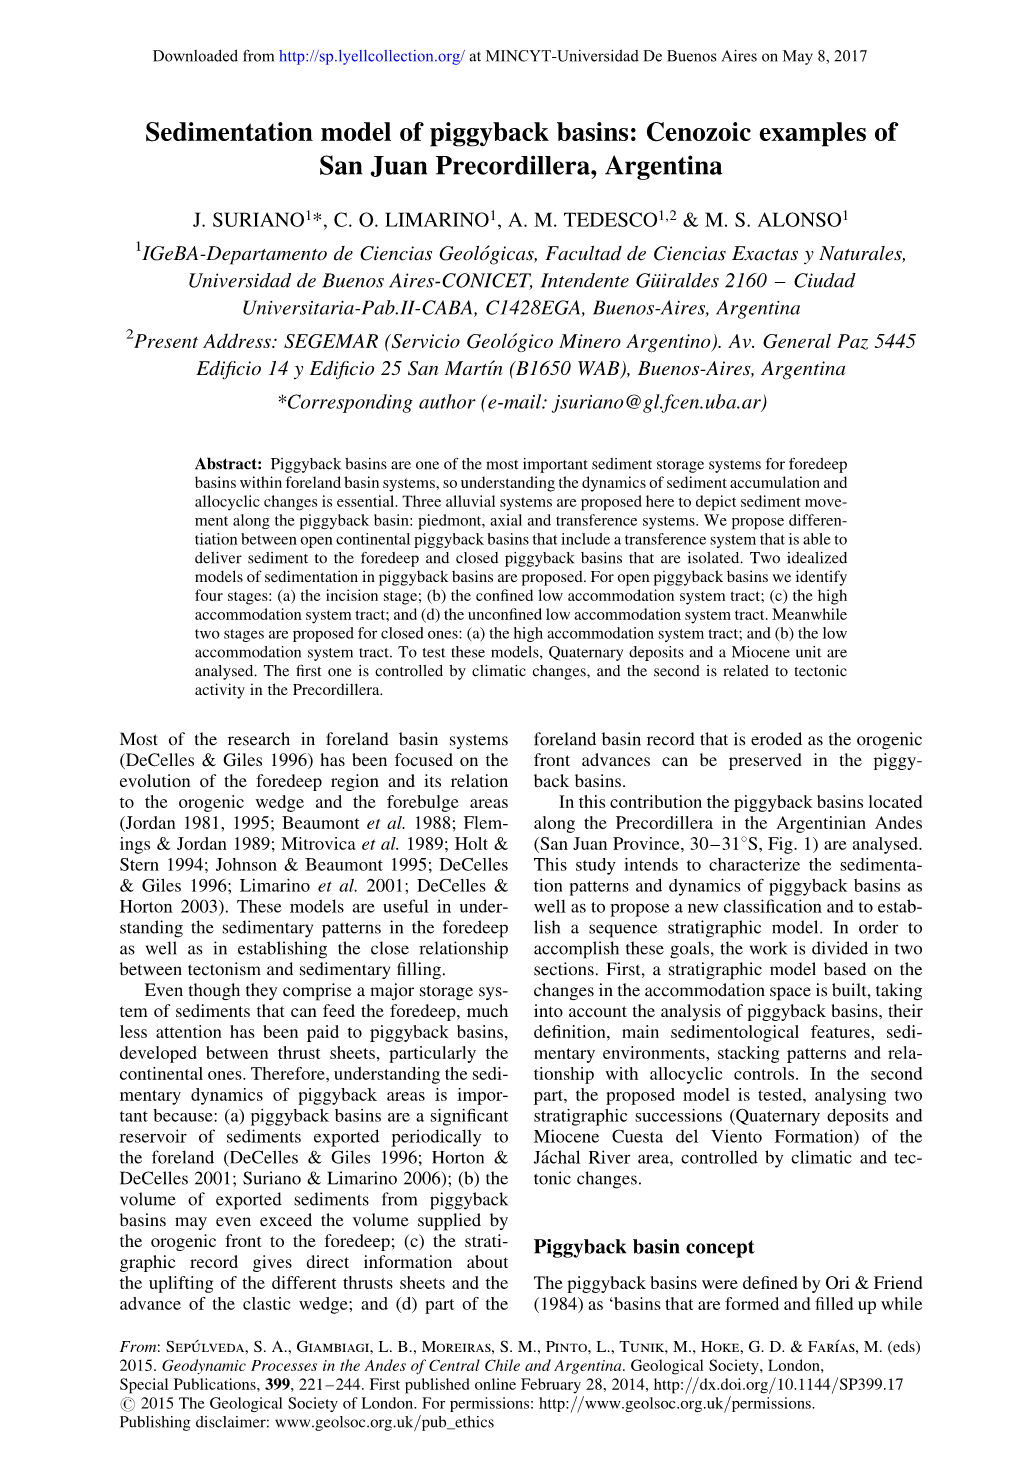 Sedimentation Model of Piggyback Basins: Cenozoic Examples of San Juan Precordillera, Argentina